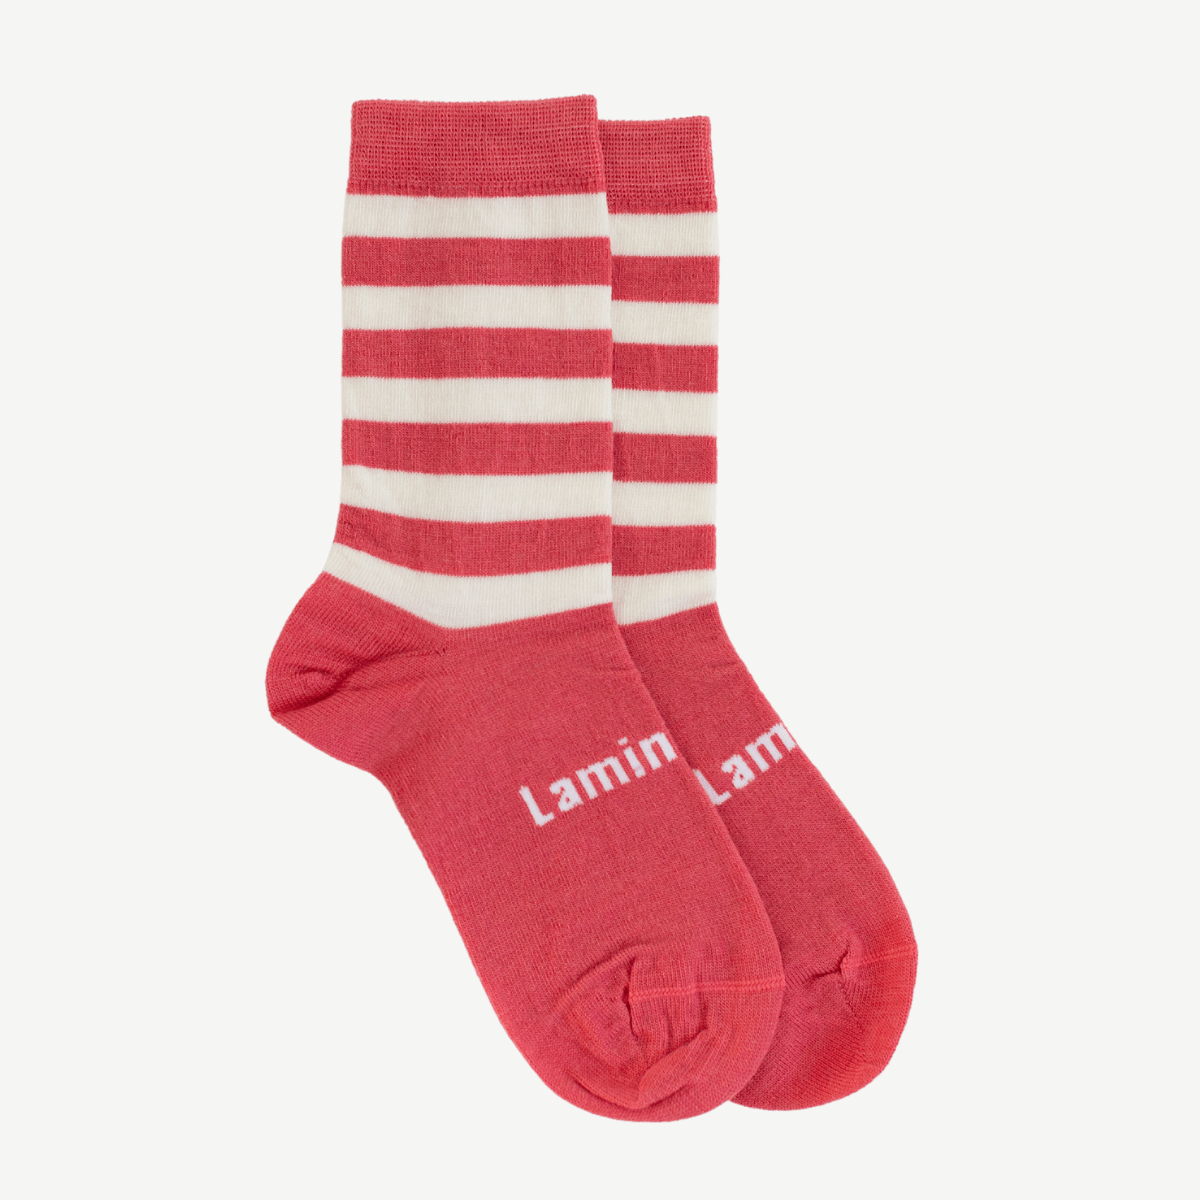 pink striped socks child merino wool nz aus